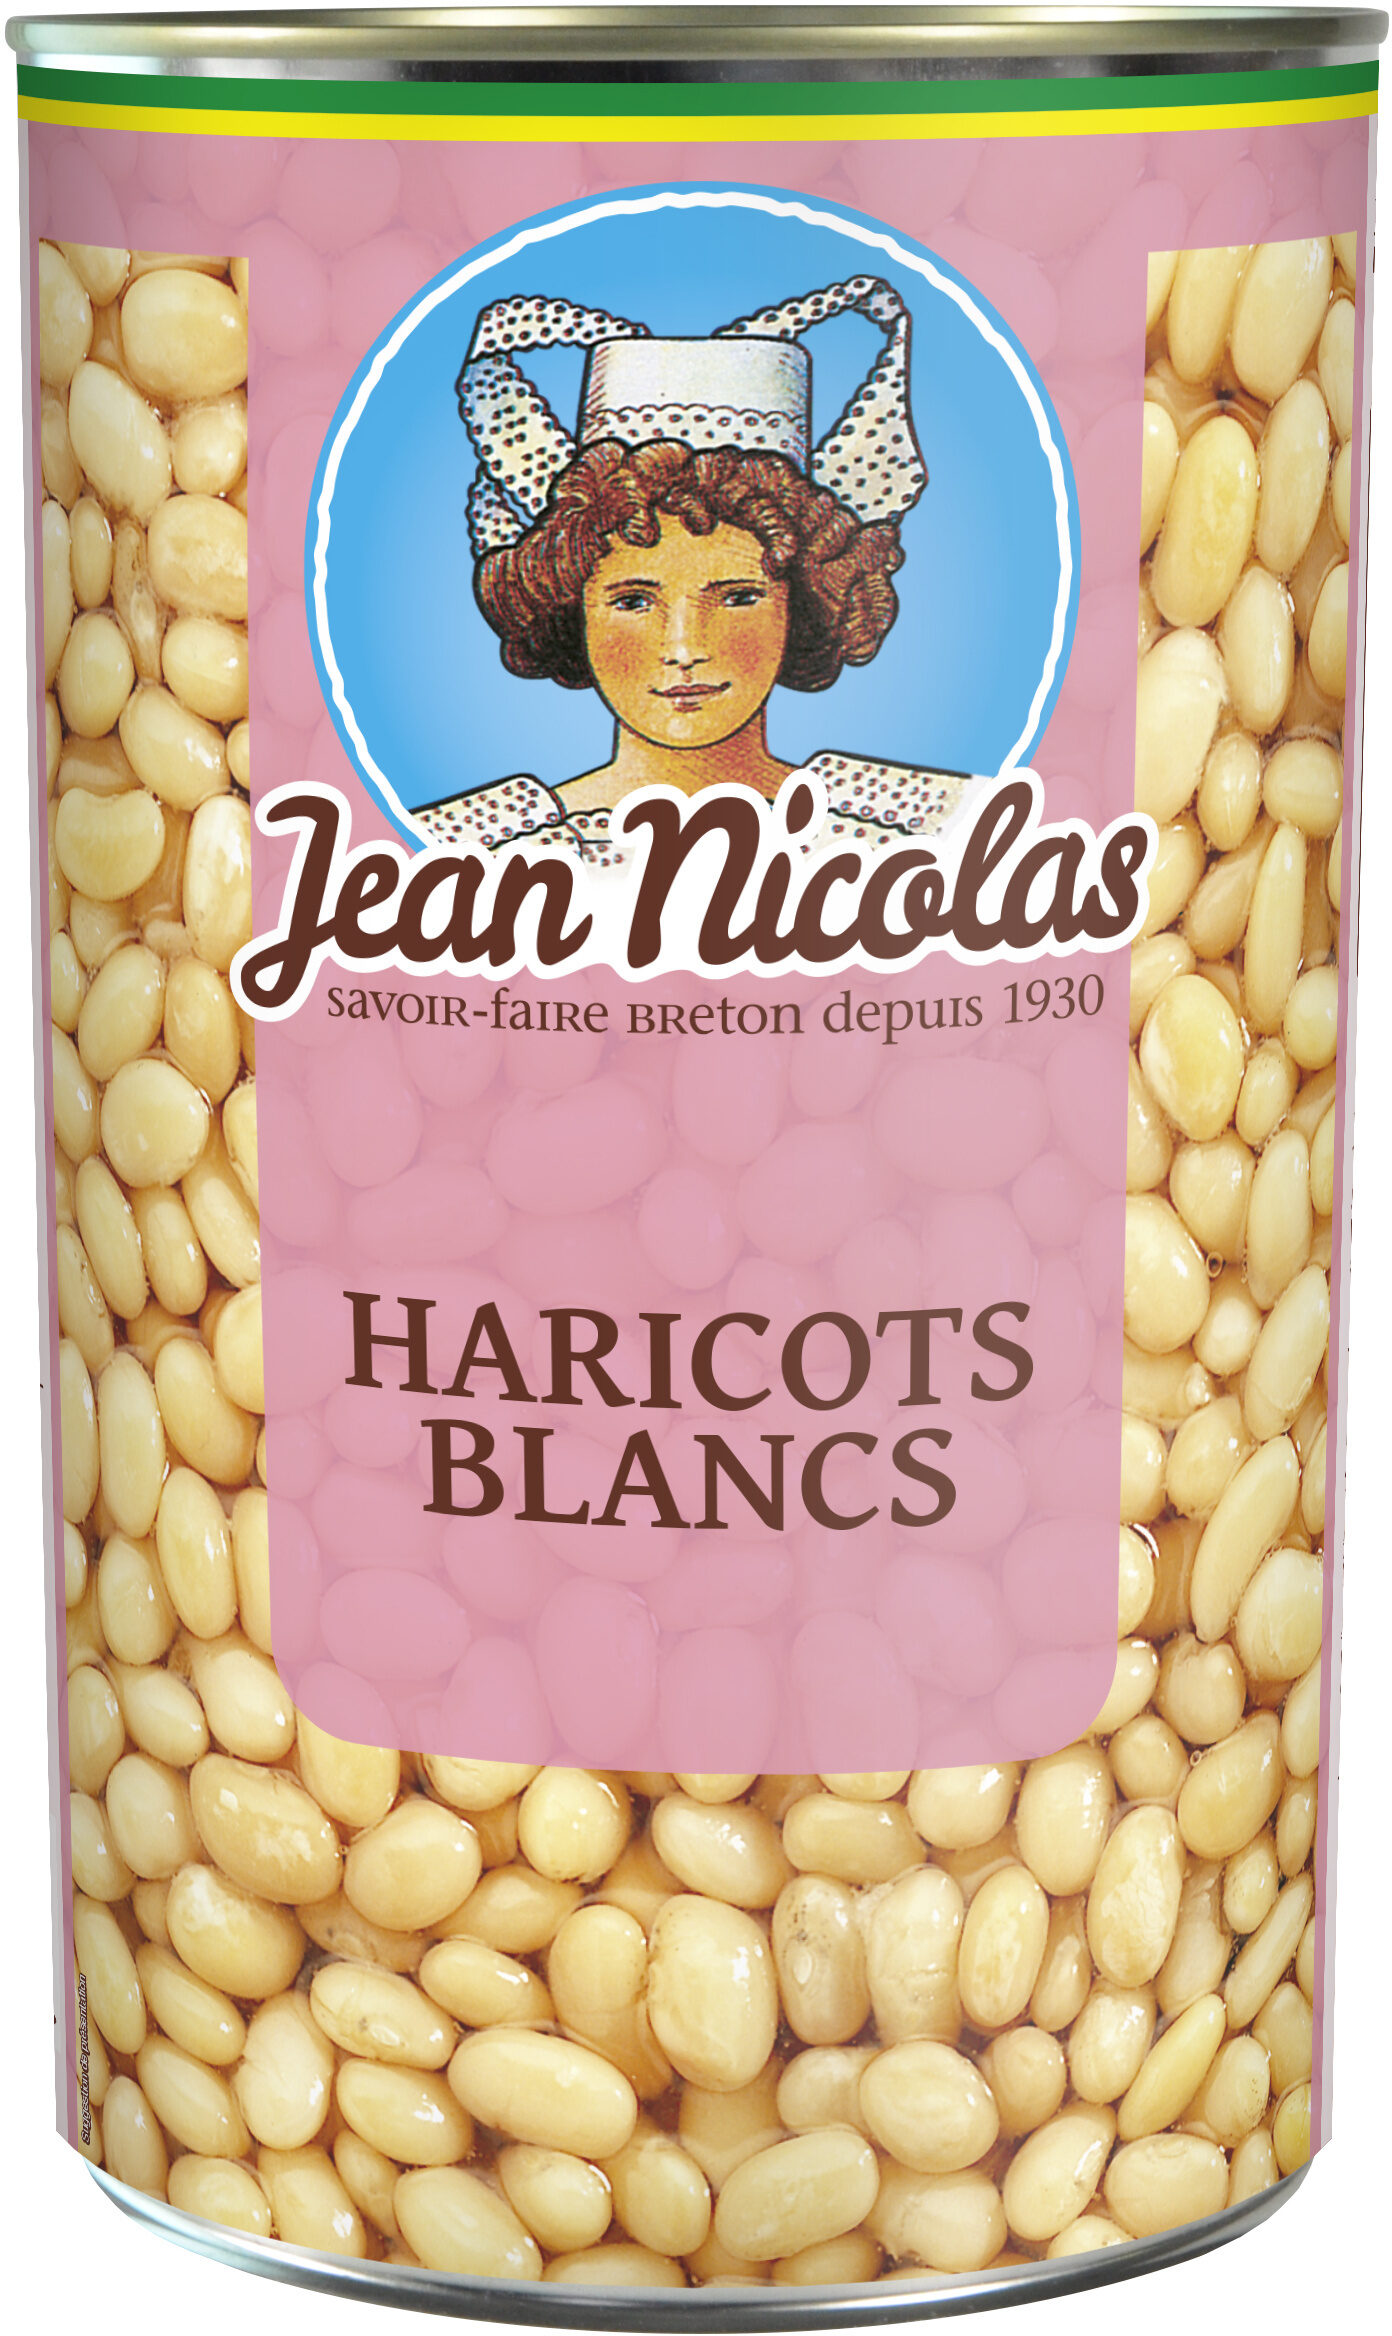 Jean nicolas 2655g haricots blancs au naturel - Prodotto - fr